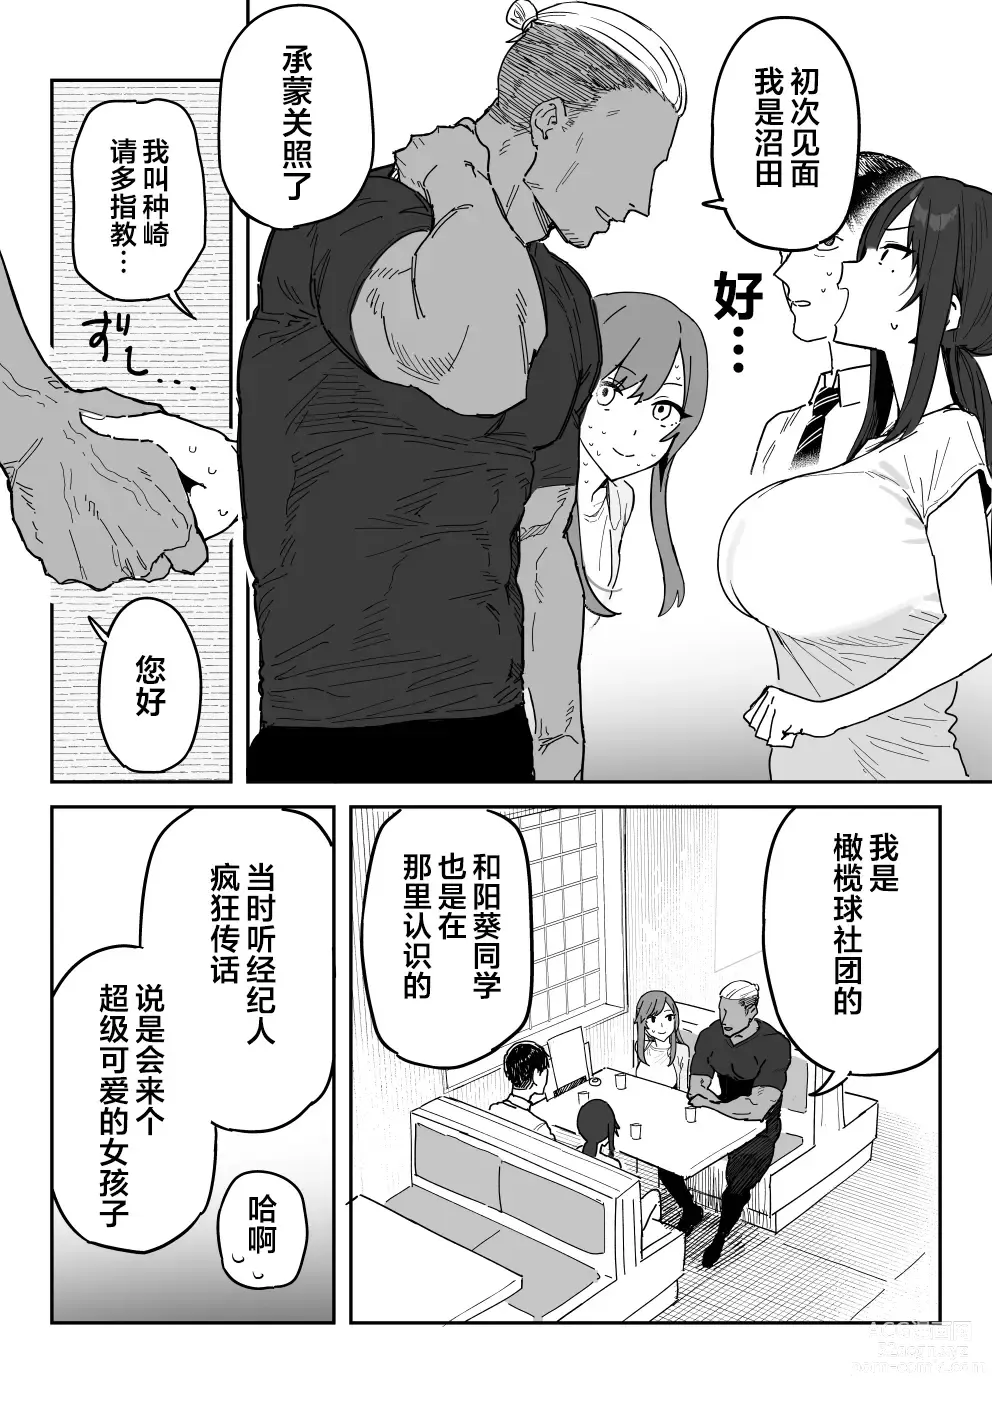 Page 5 of doujinshi 种崎佳织(39岁)代替女儿同人AV出道